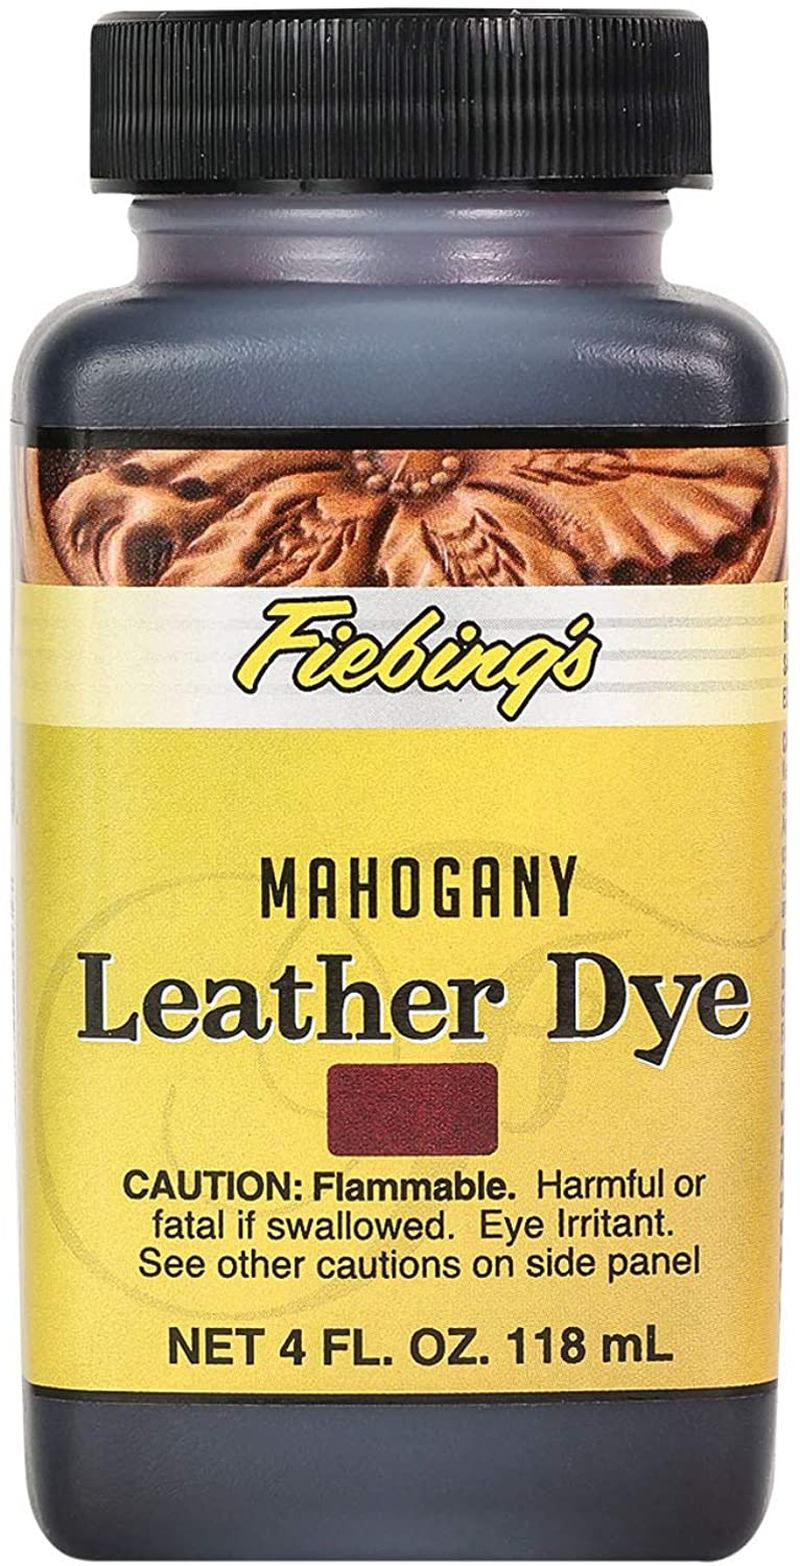 Fiebing's Leather Dye - Alcohol Based Permanent Leather Dye - 4 oz